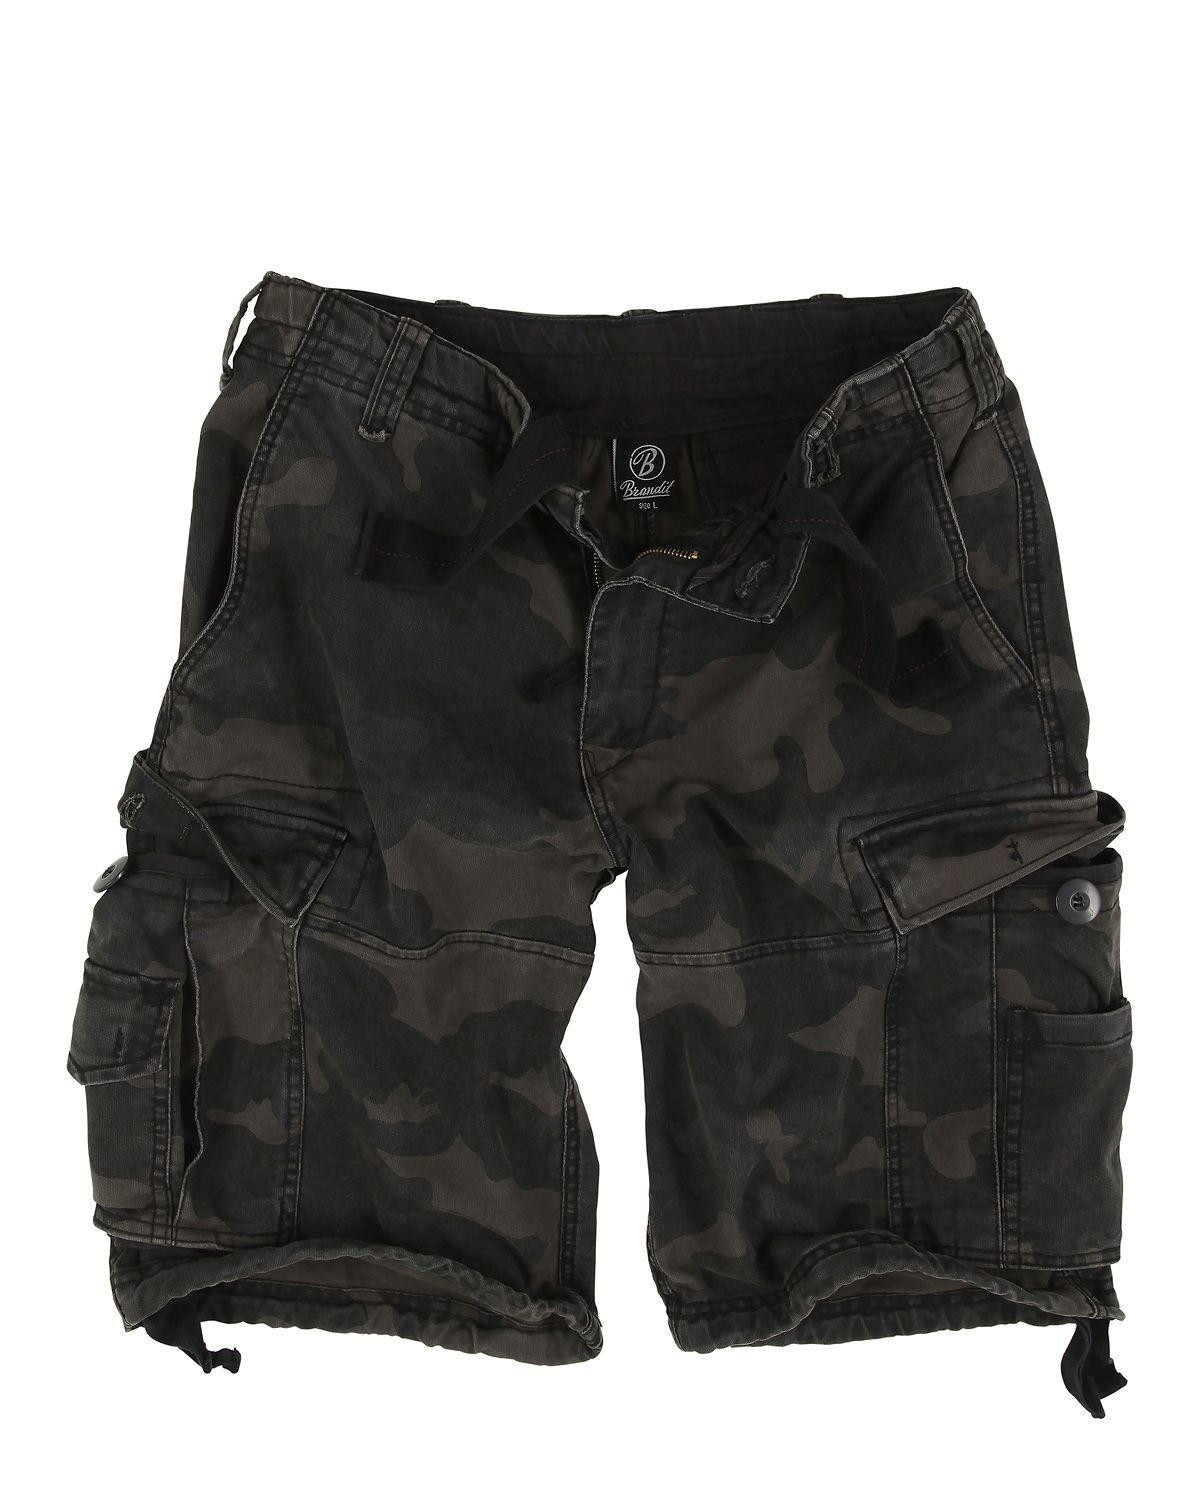 Brandit Vintage Shorts (Black Camo, M)